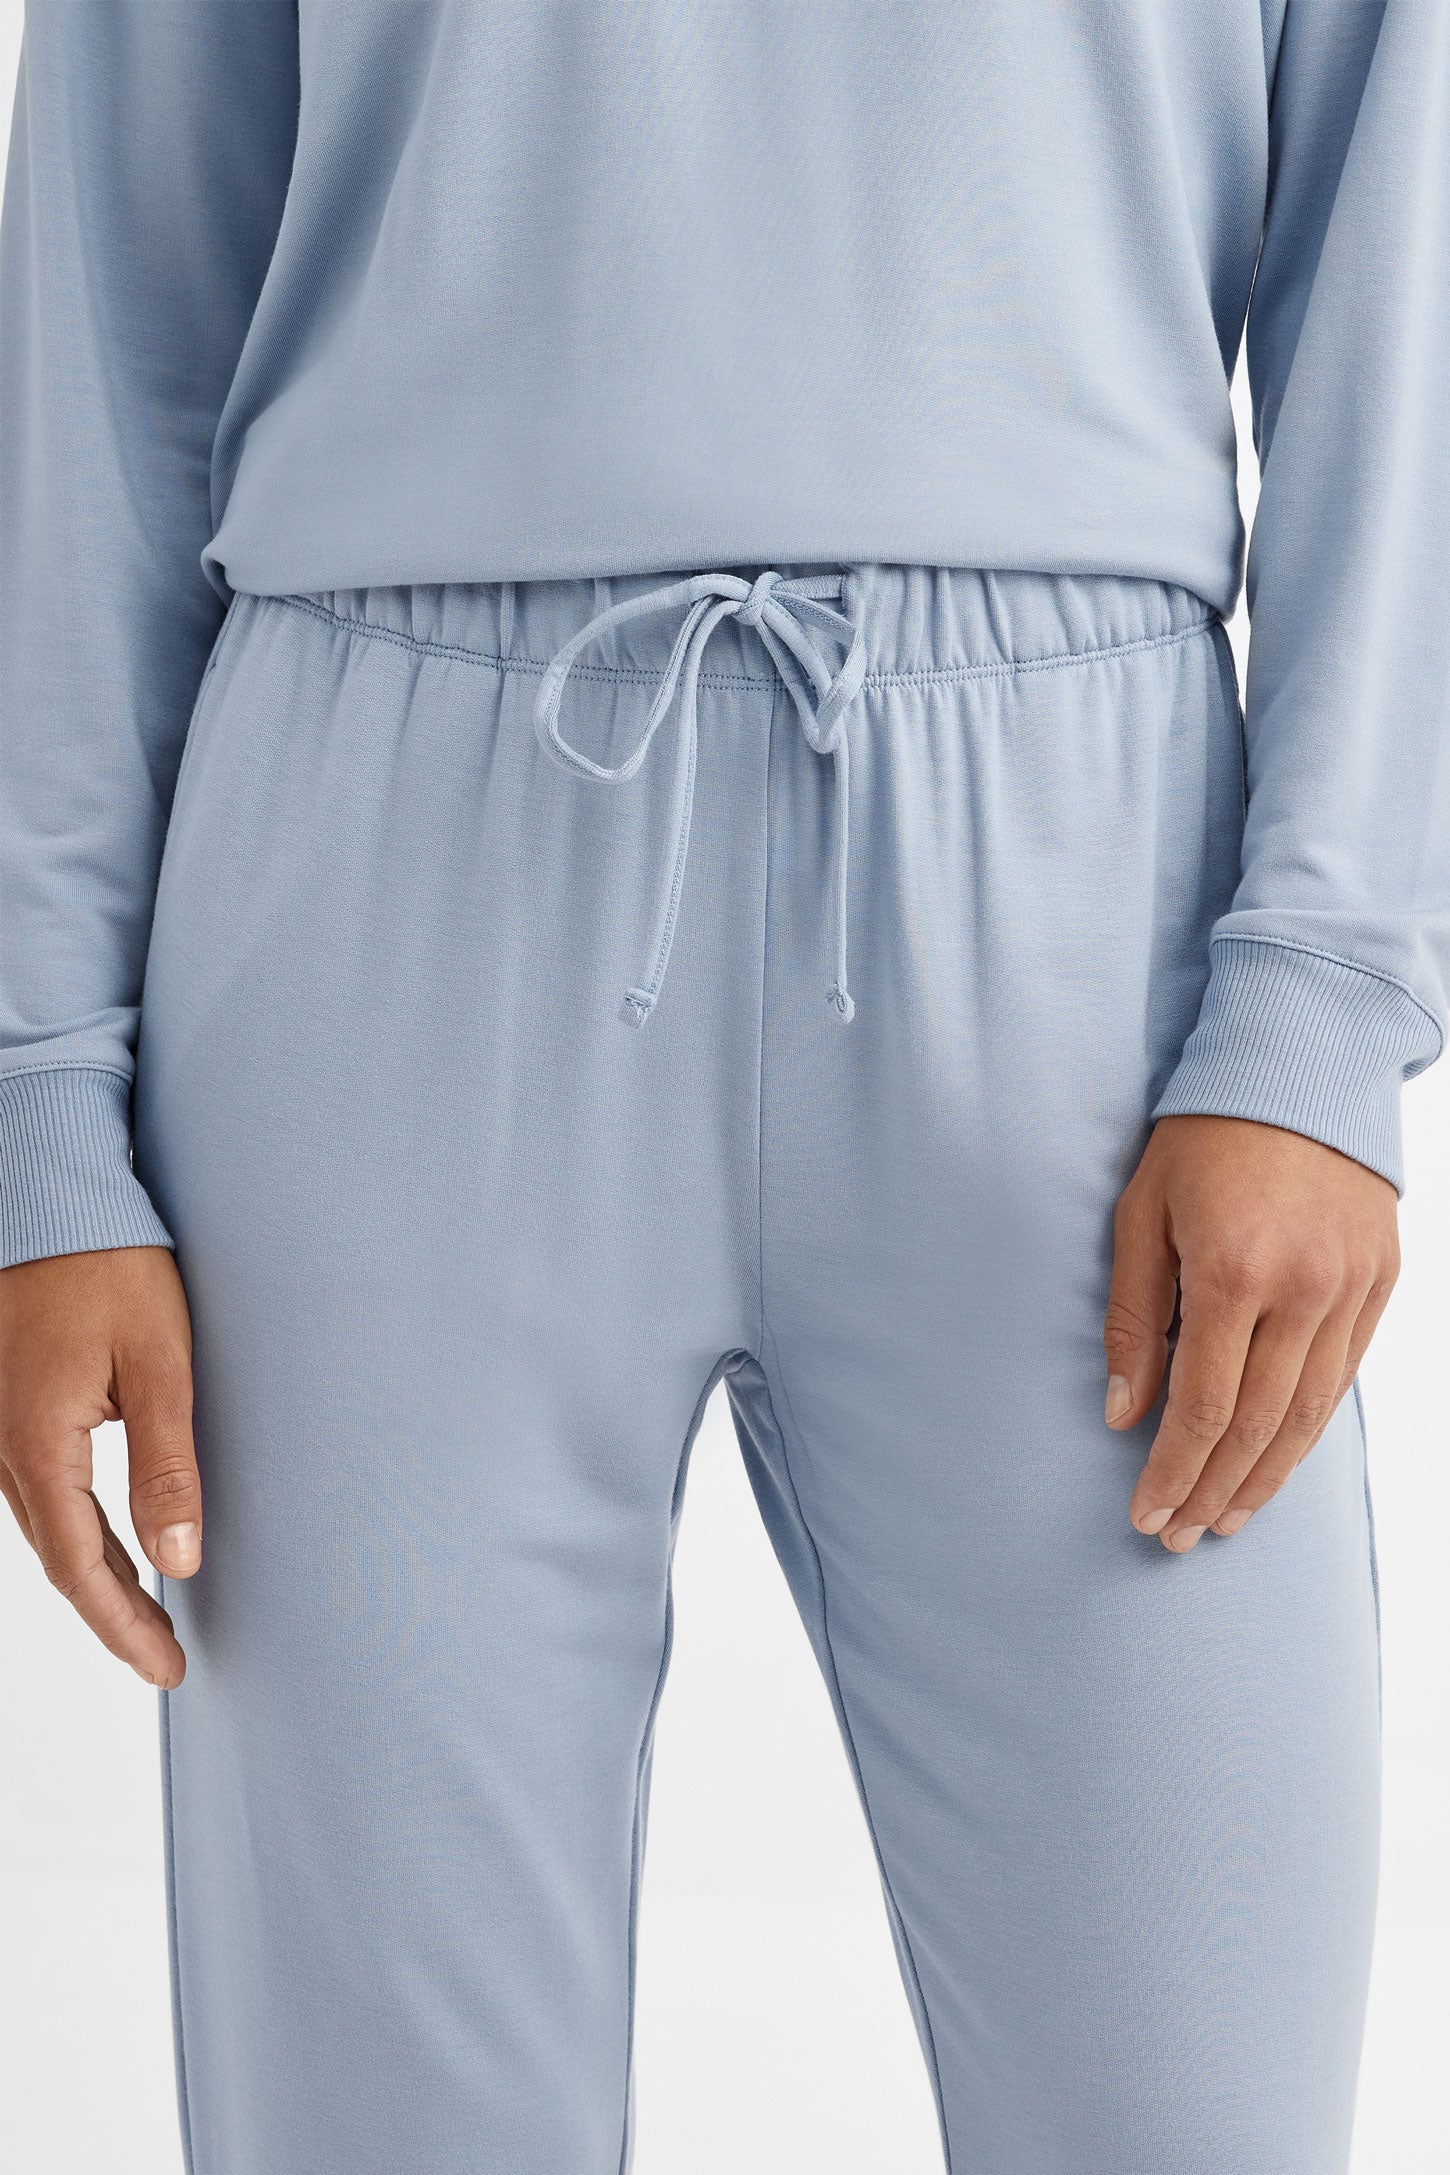 Pantalon jogger pyjama - Femme && BLEU